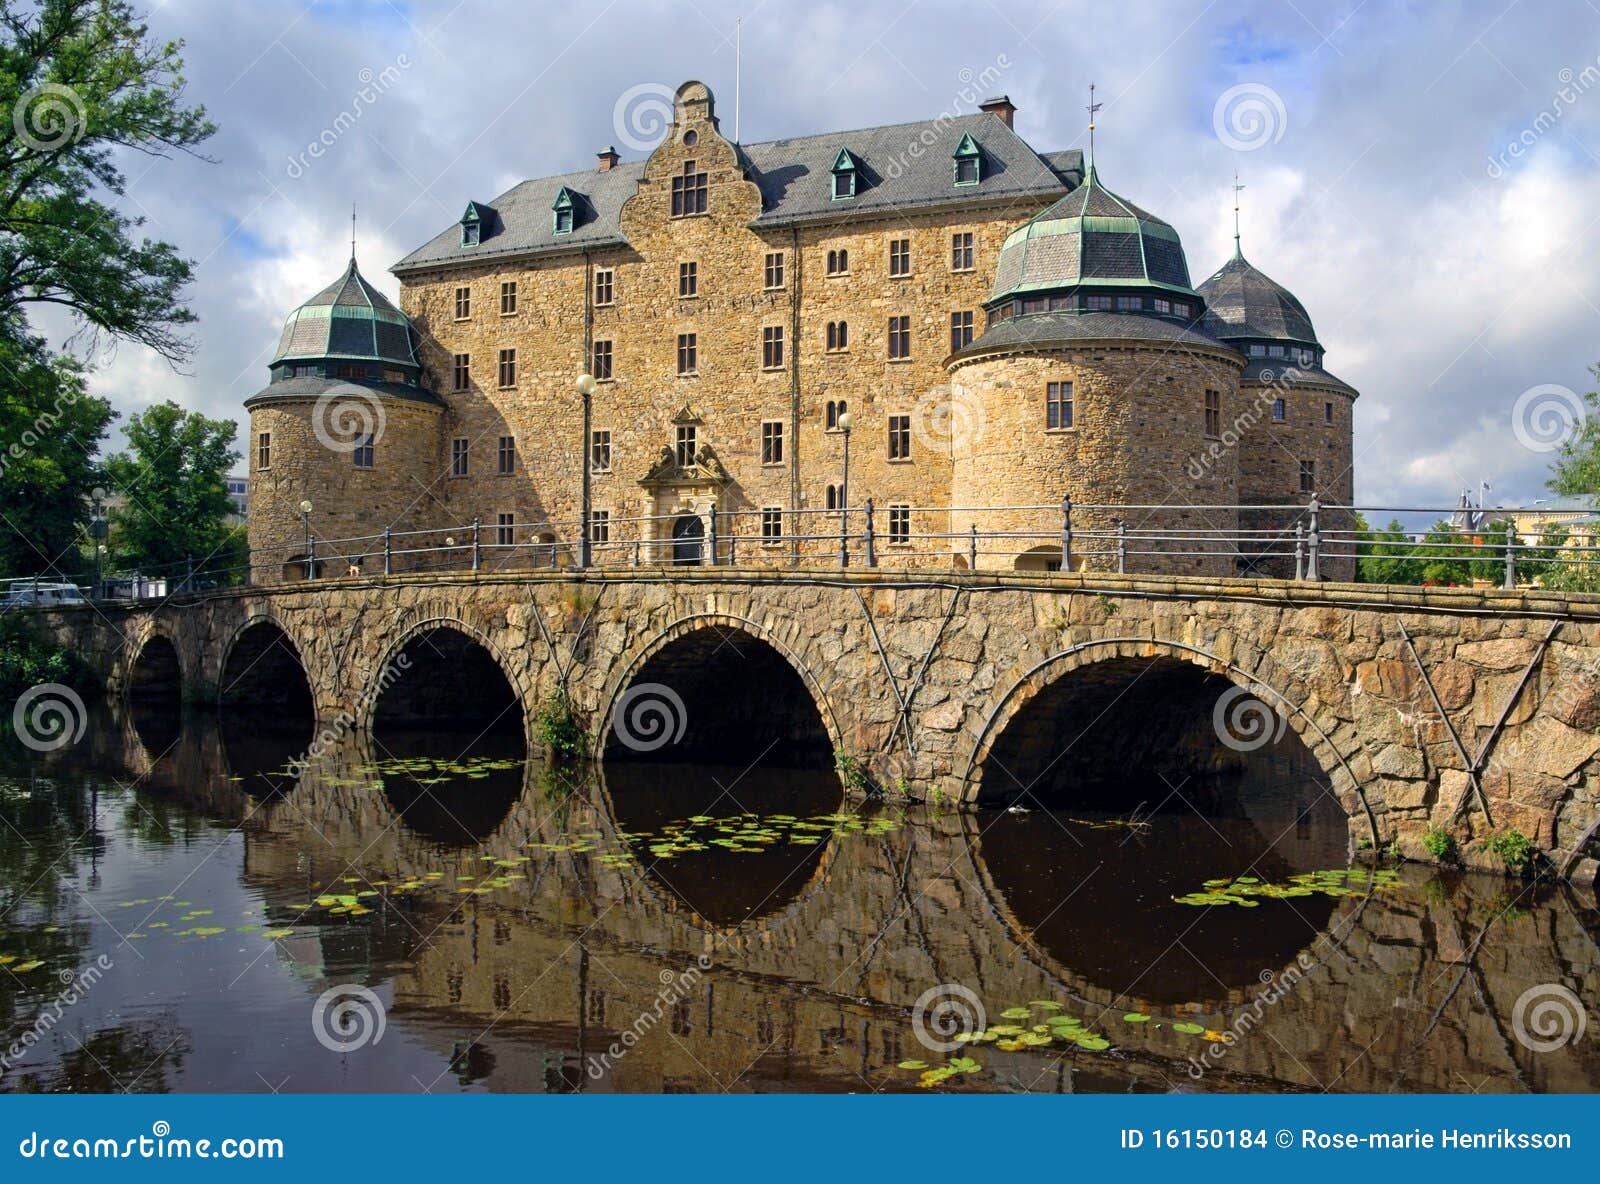 orebro castle, sweden